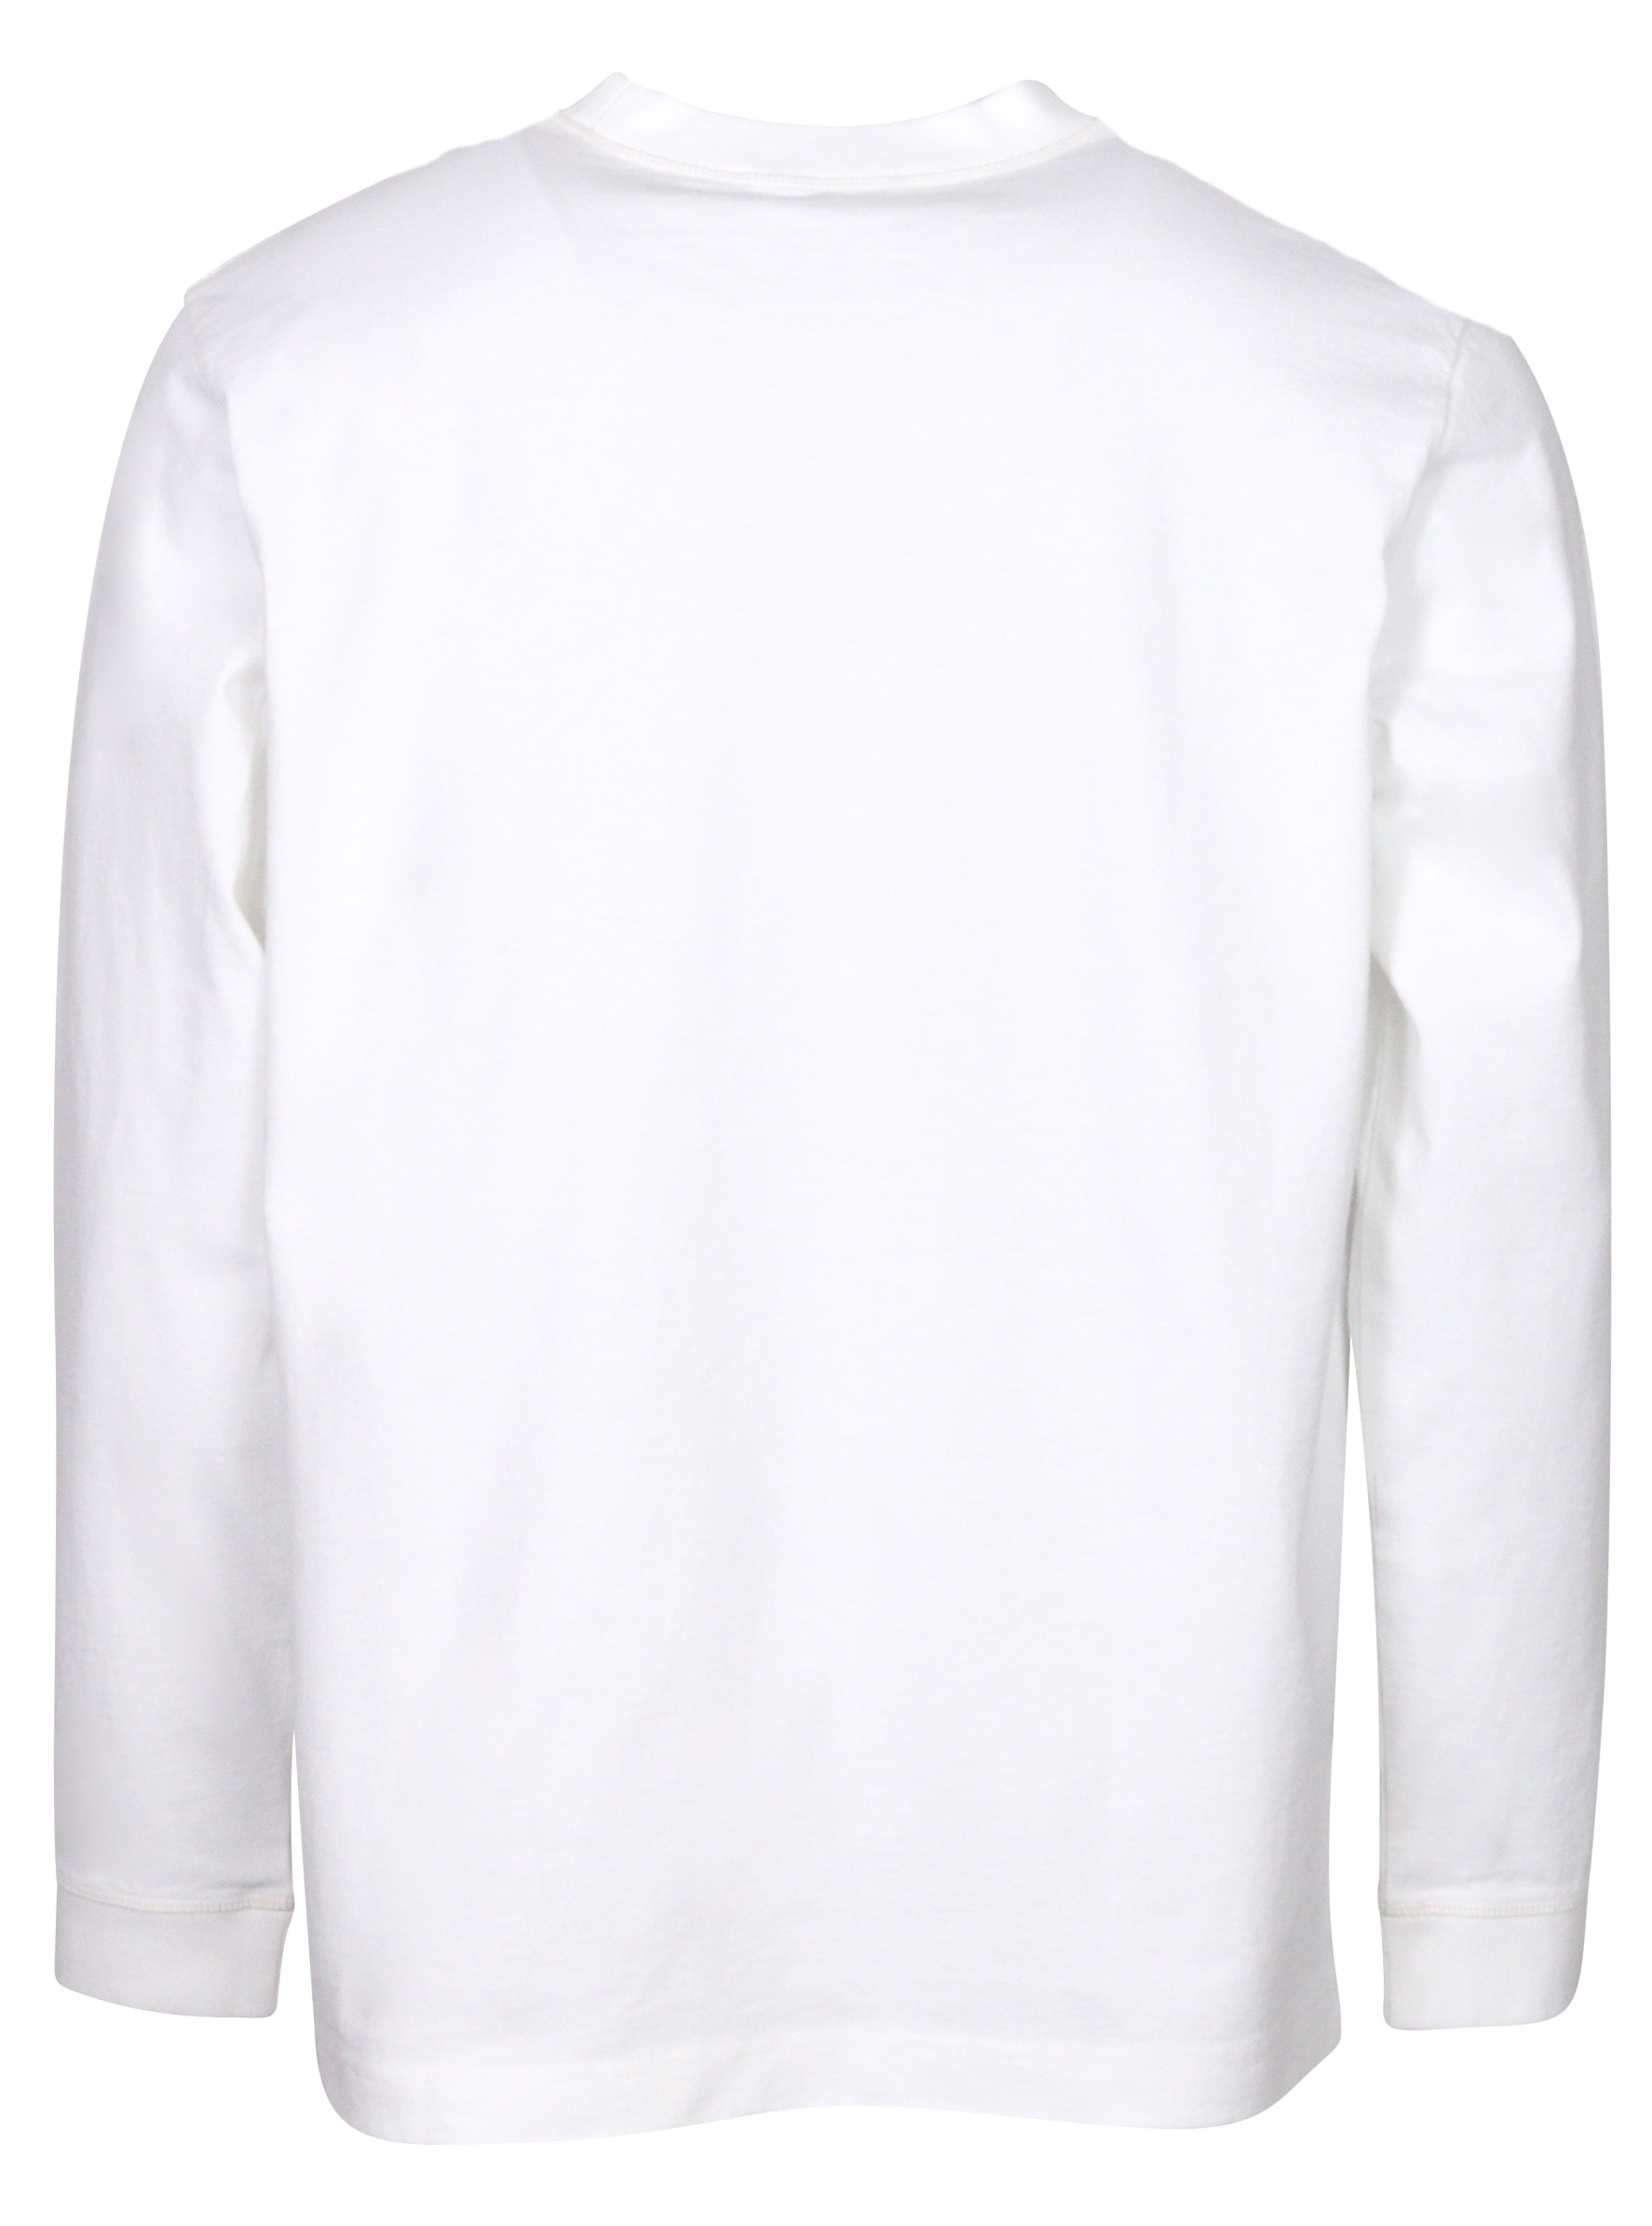 Acne Studios Sweatshirt Erwin Stamp Optic White XL